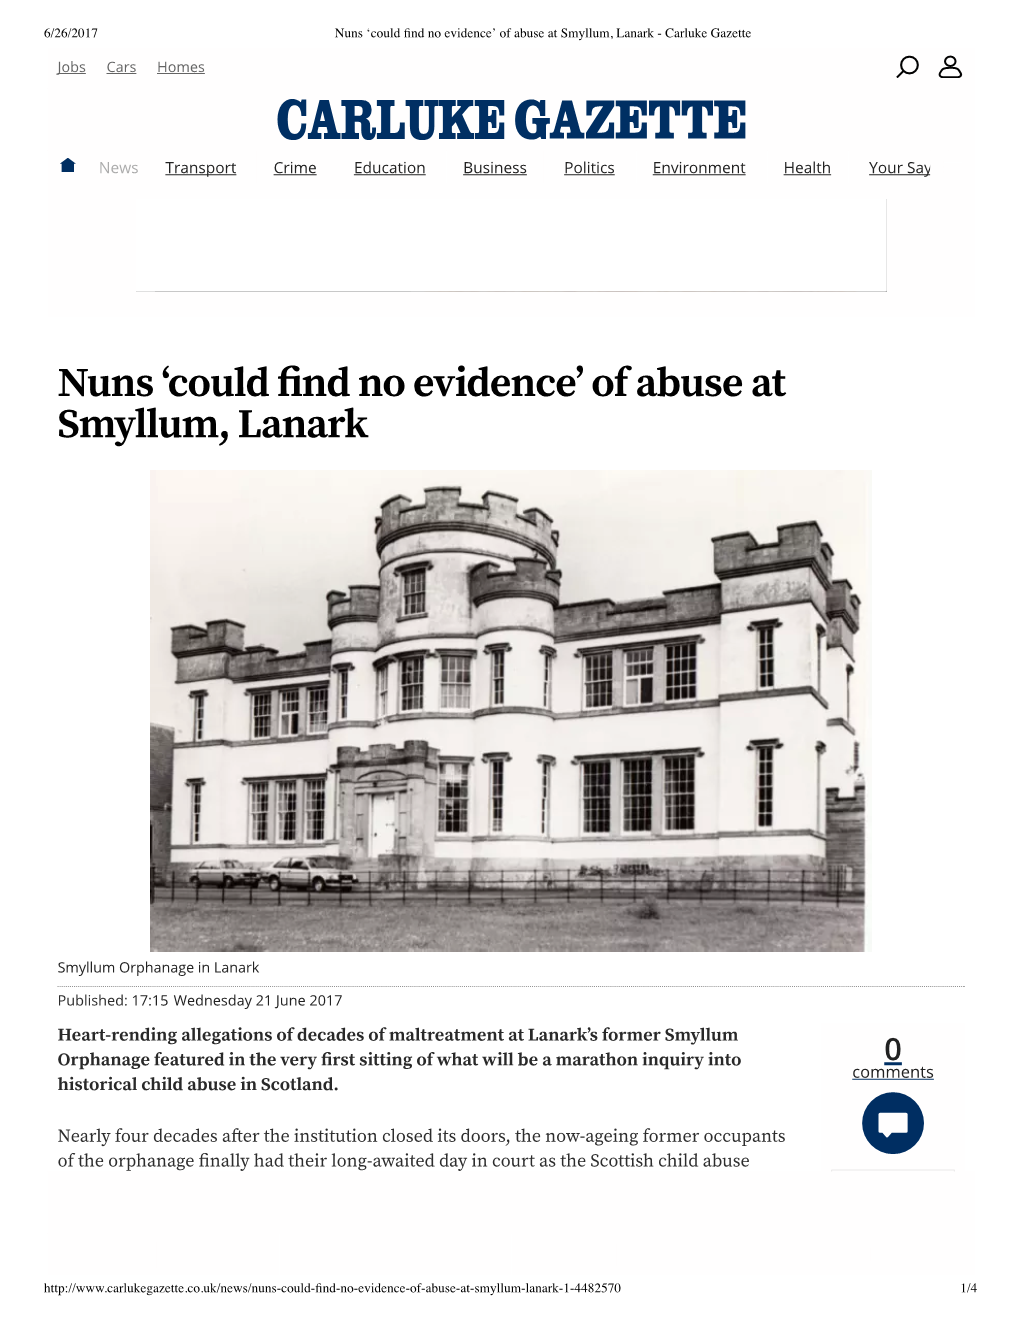 Of Abuse at Smyllum, Lanark - Carluke Gazette